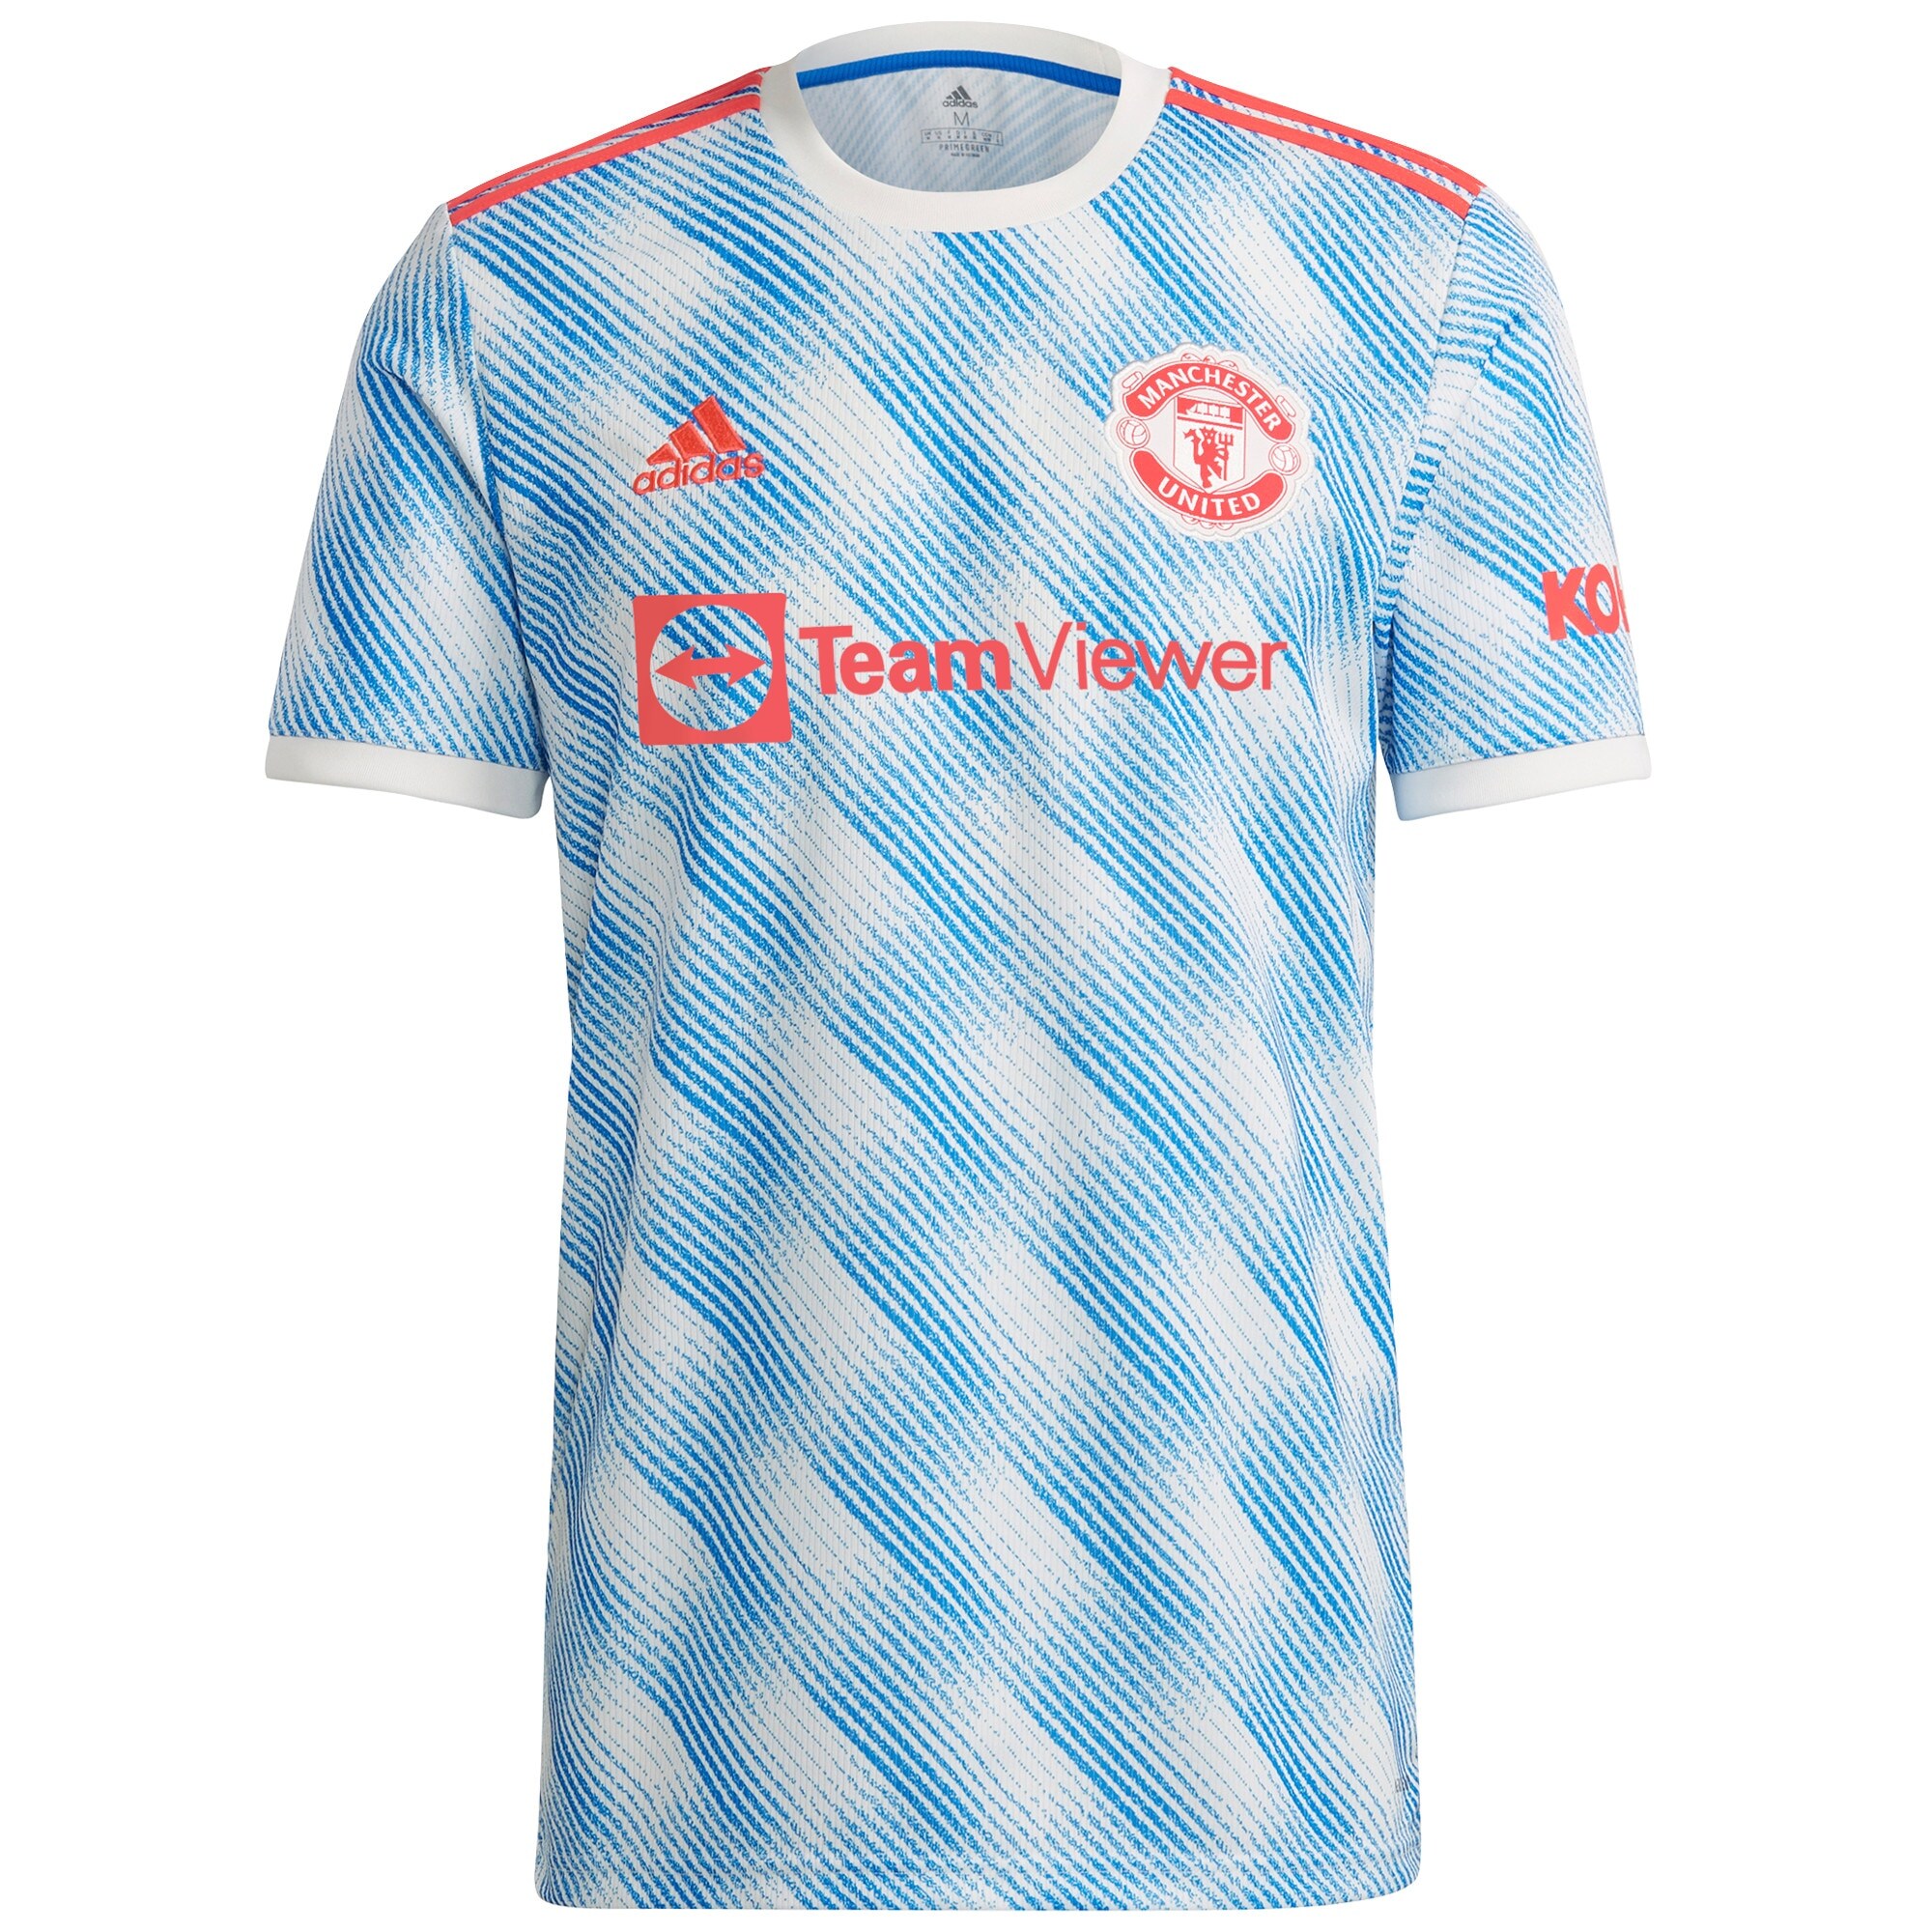 Manchester United Away Shirt 2021-22 with Cavani 21 printing